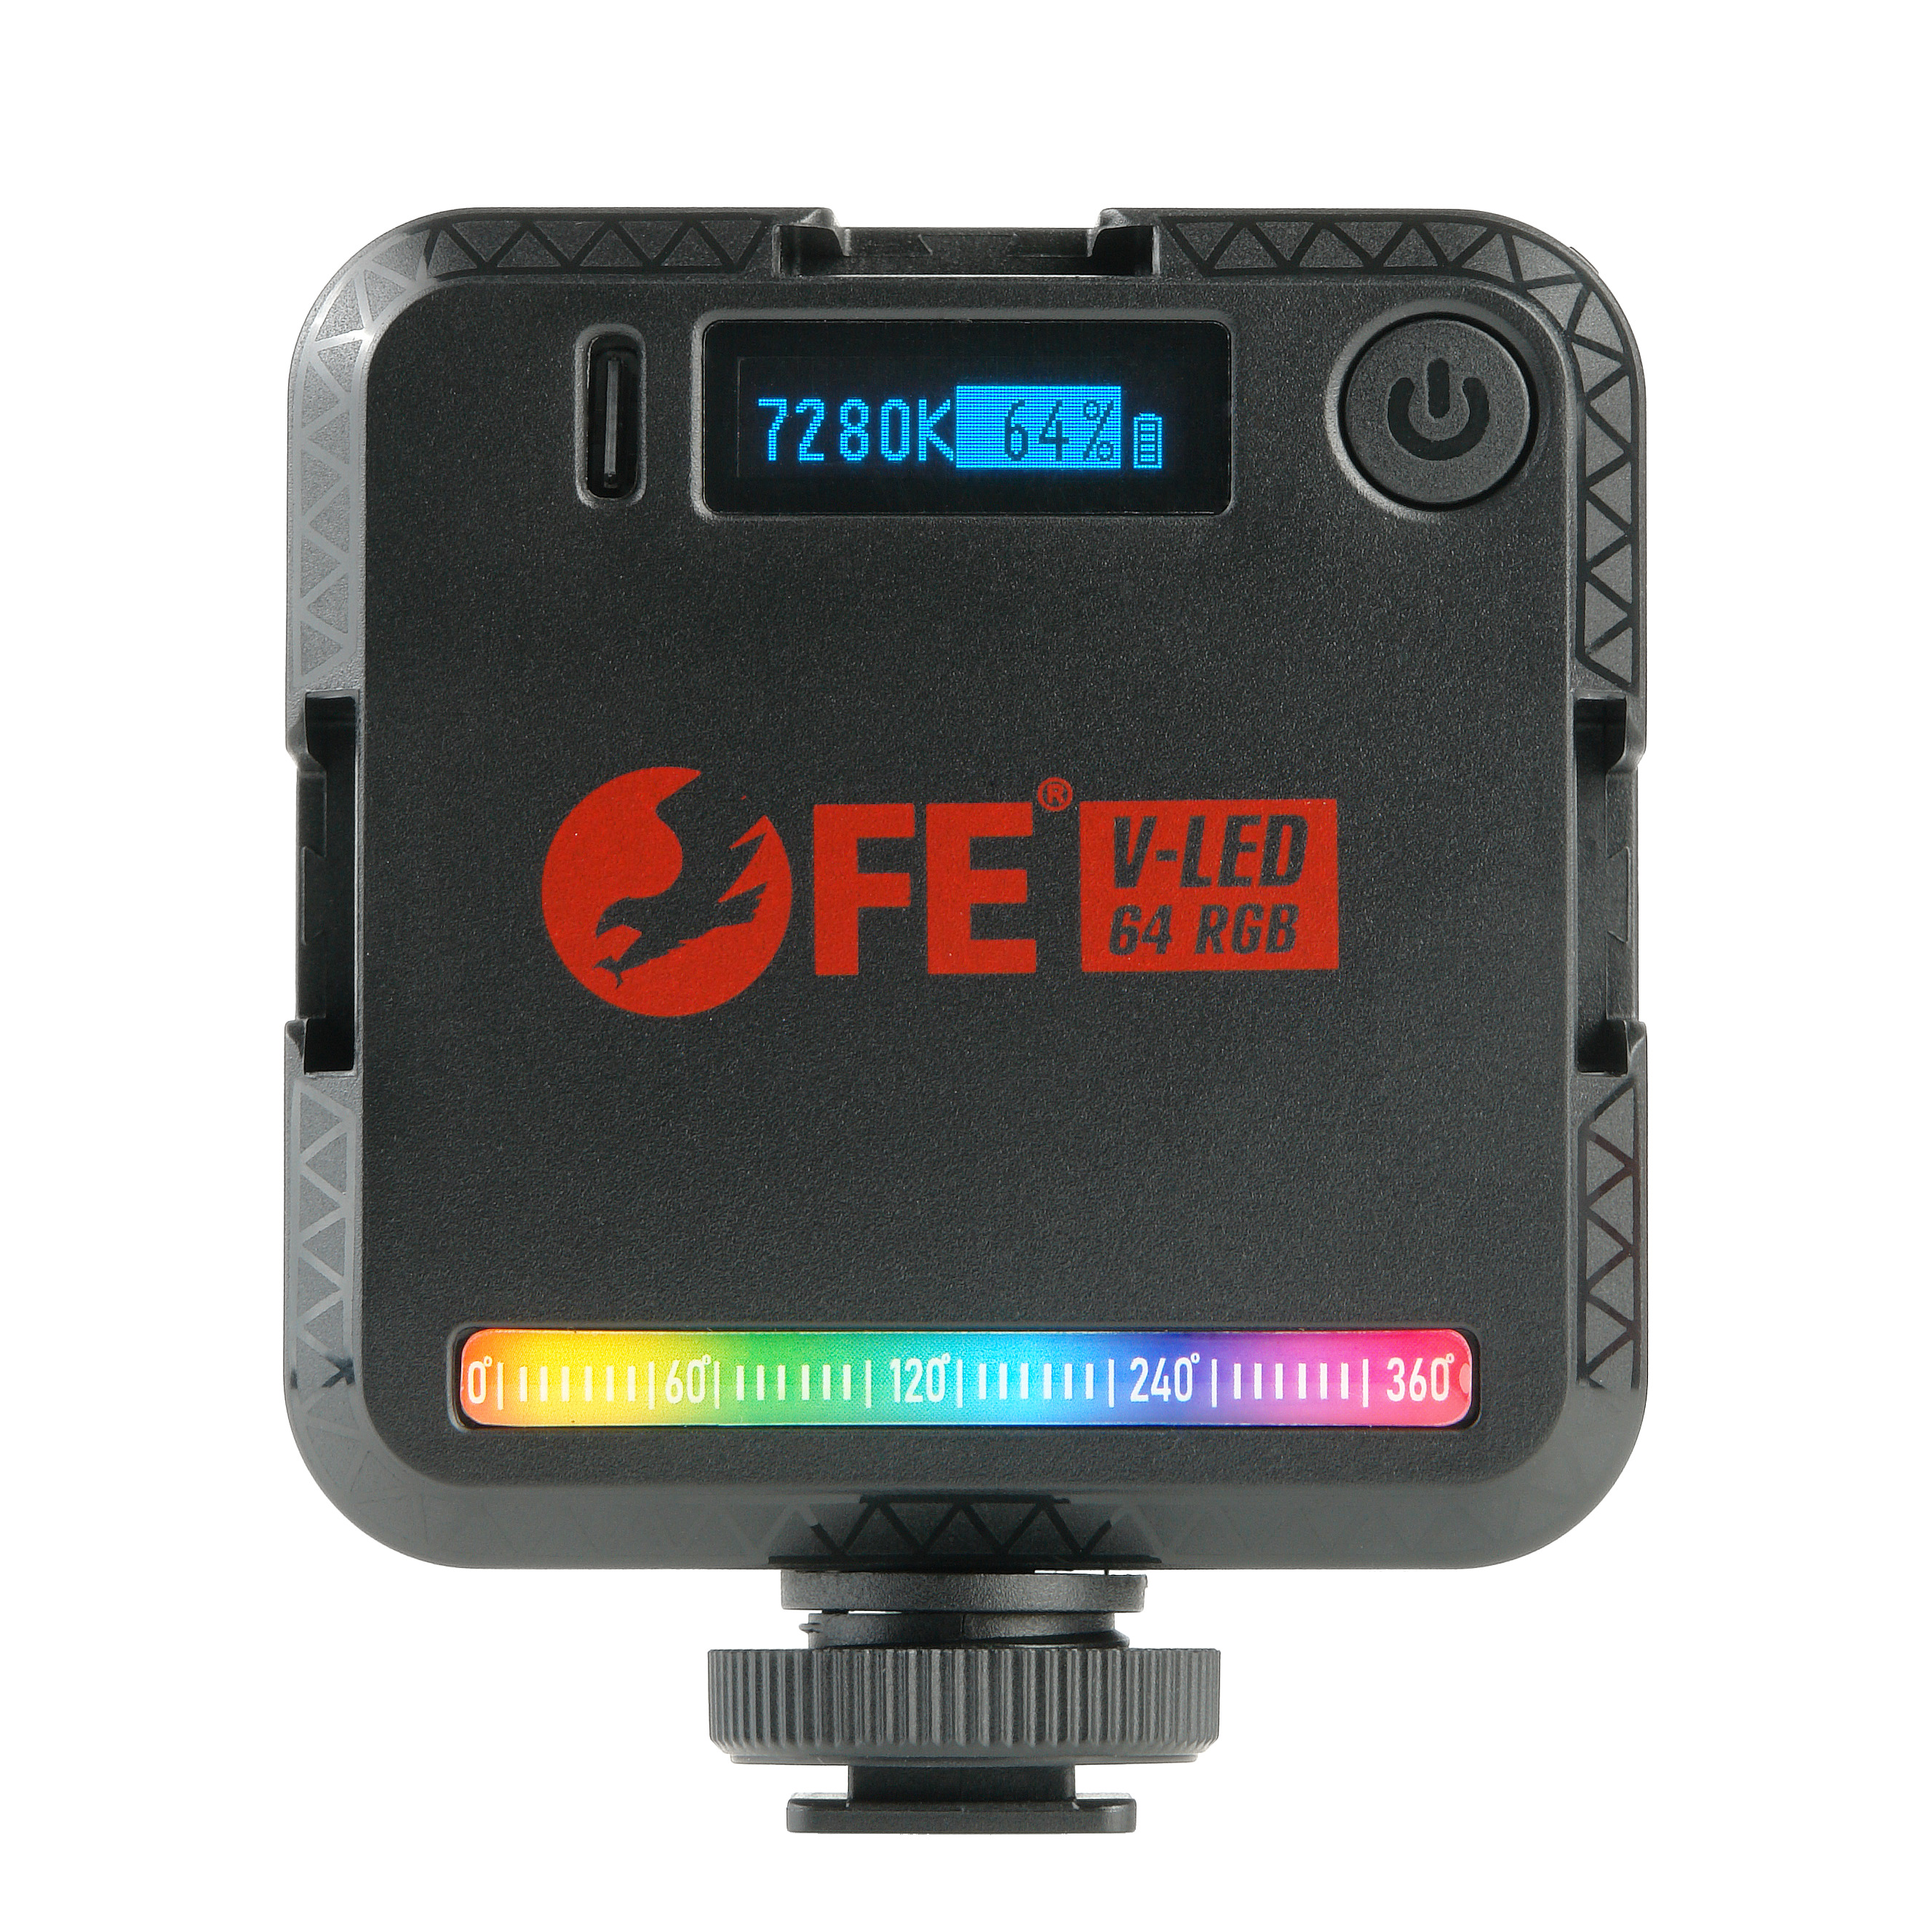   Falcon Eyes V-LED 64 RGB     Ultra-mart